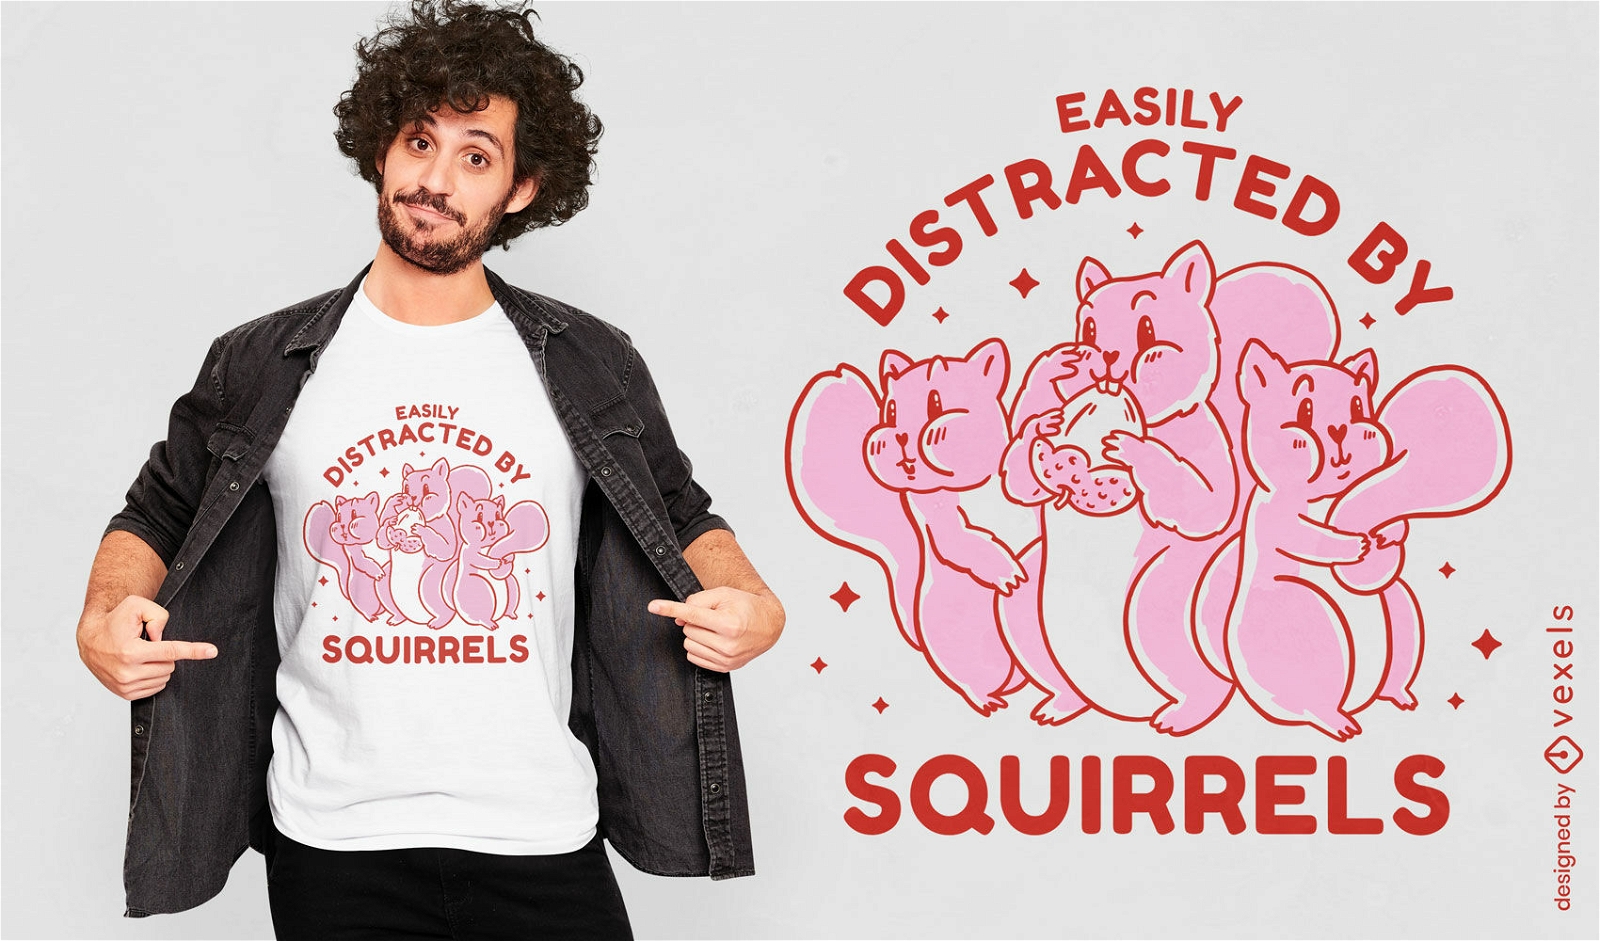 Abgelenkt durch Eichhörnchen zitieren T-Shirt Design